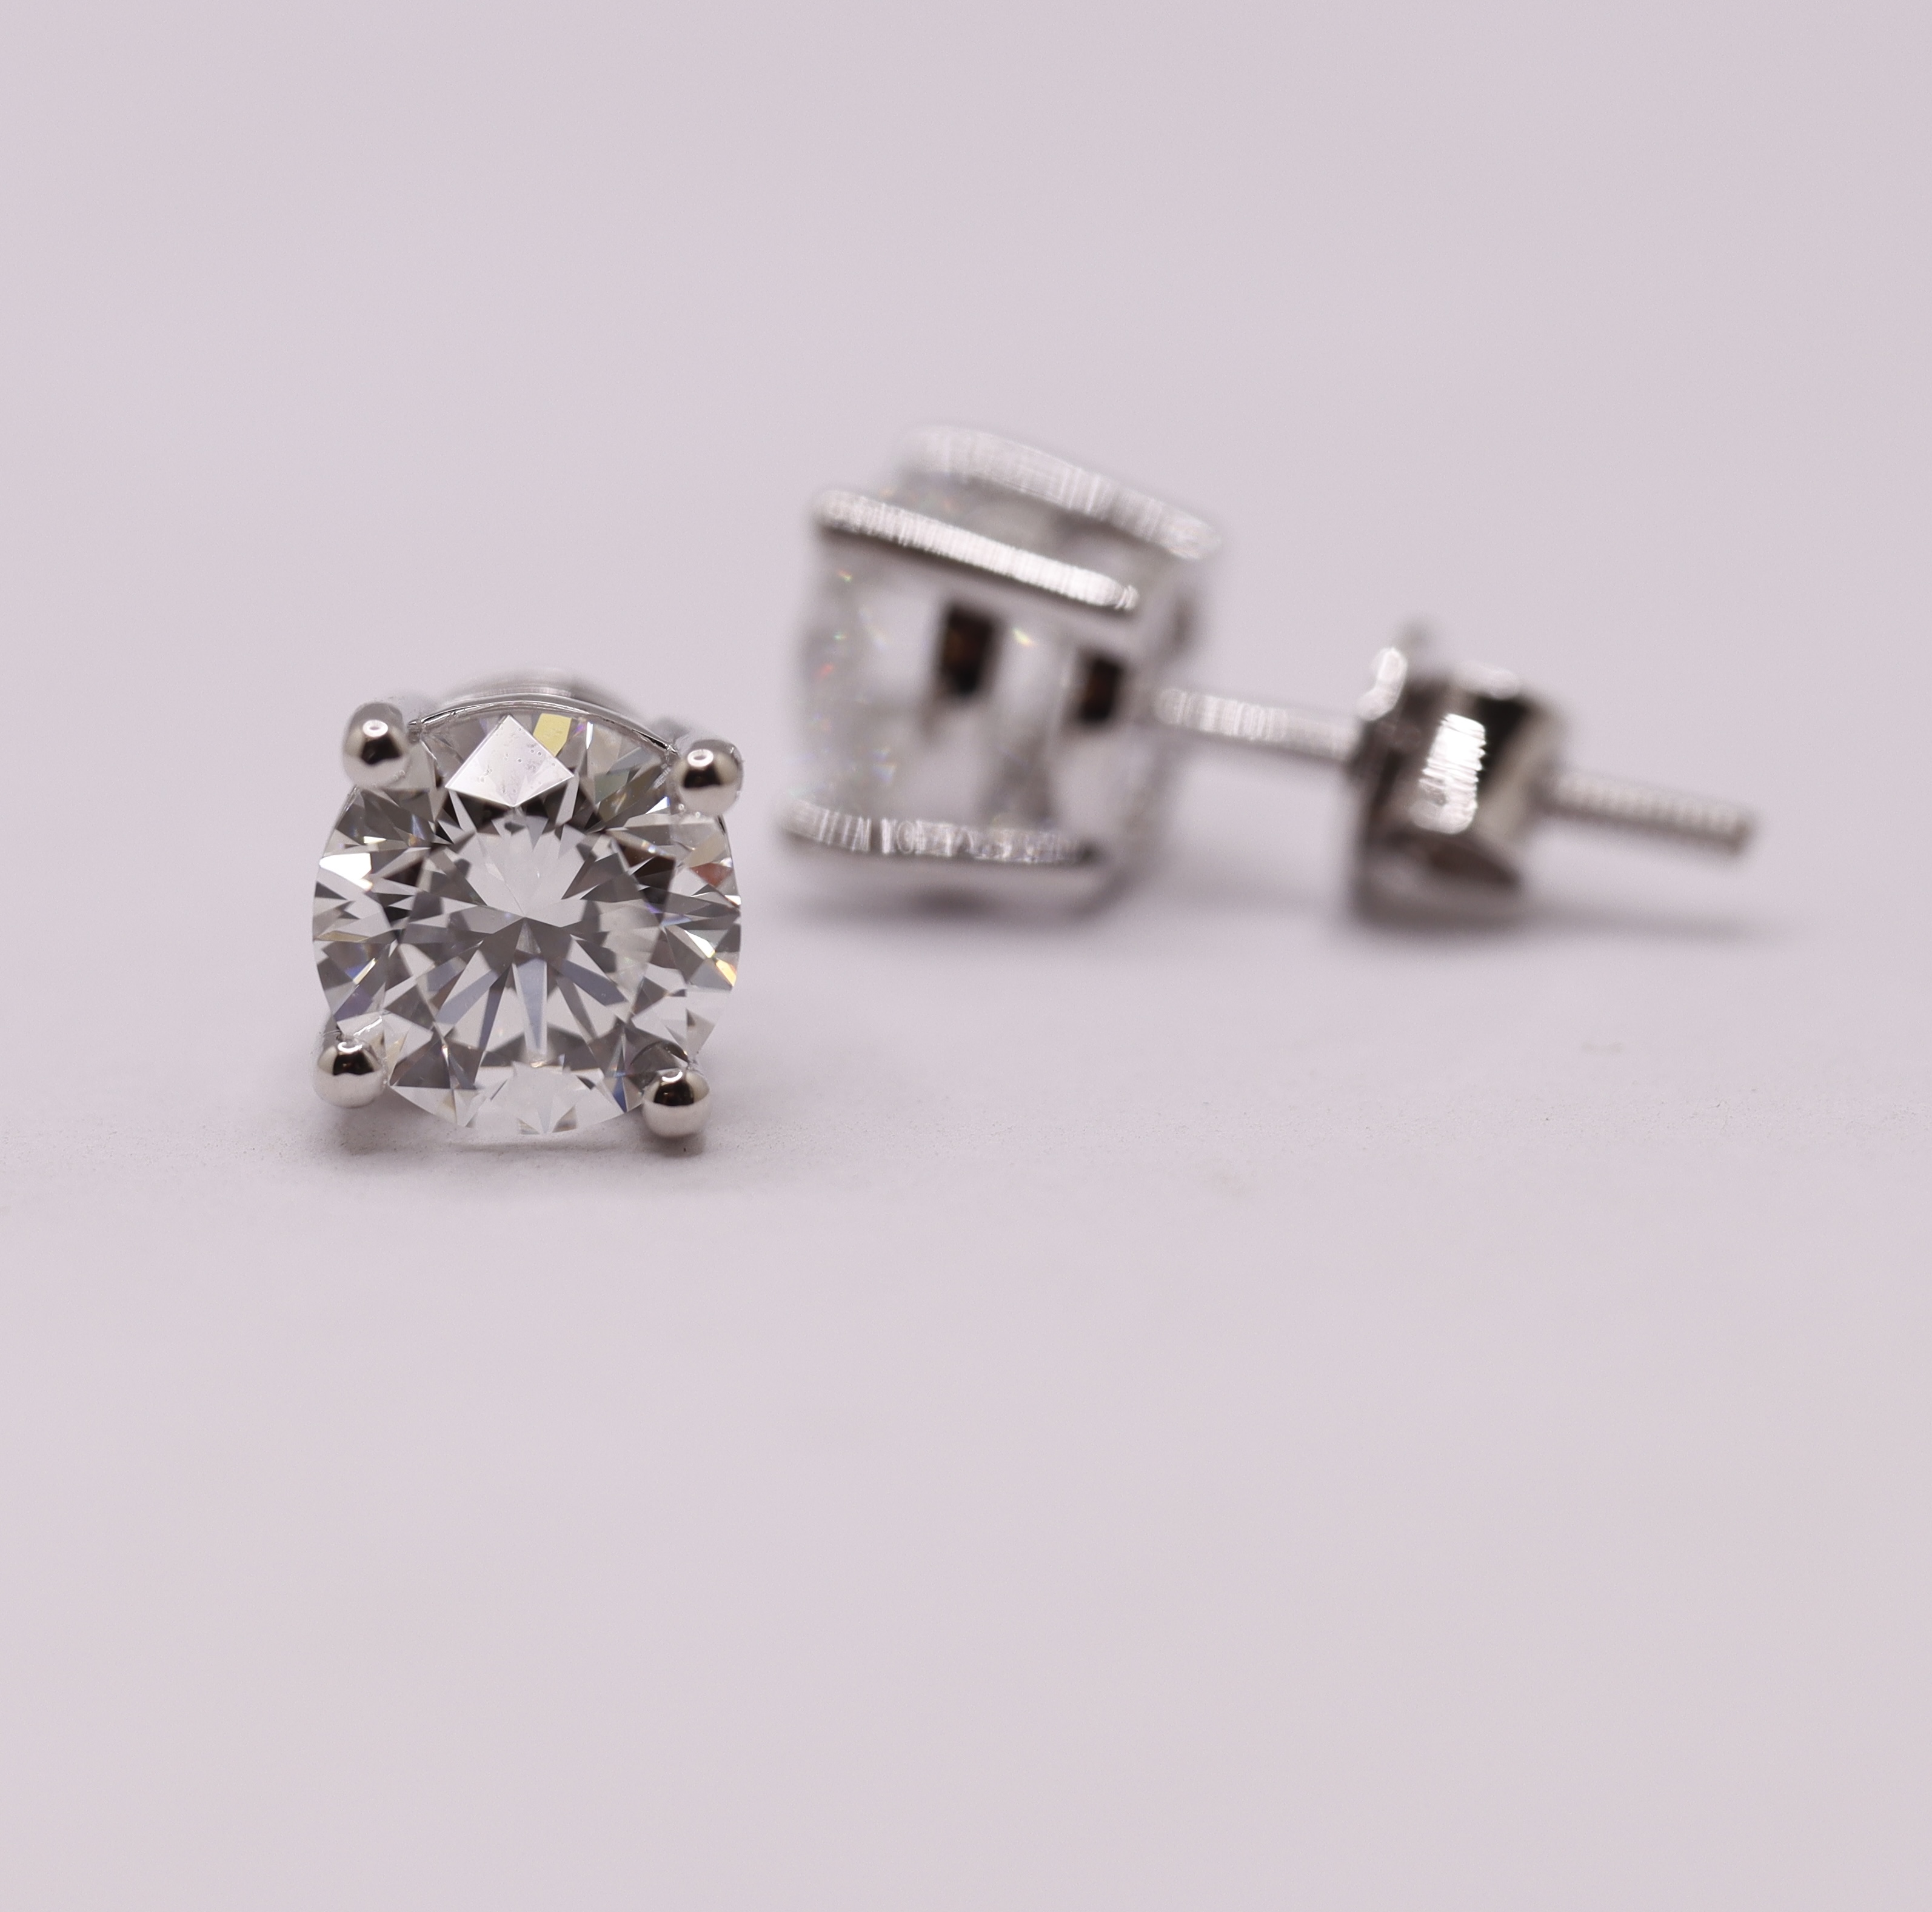 ** ON SALE ** Round Brilliant Cut 3.02 Carat Diamond 18kt White Gold Earrings - E Colour VS1 Clarity - Image 5 of 11